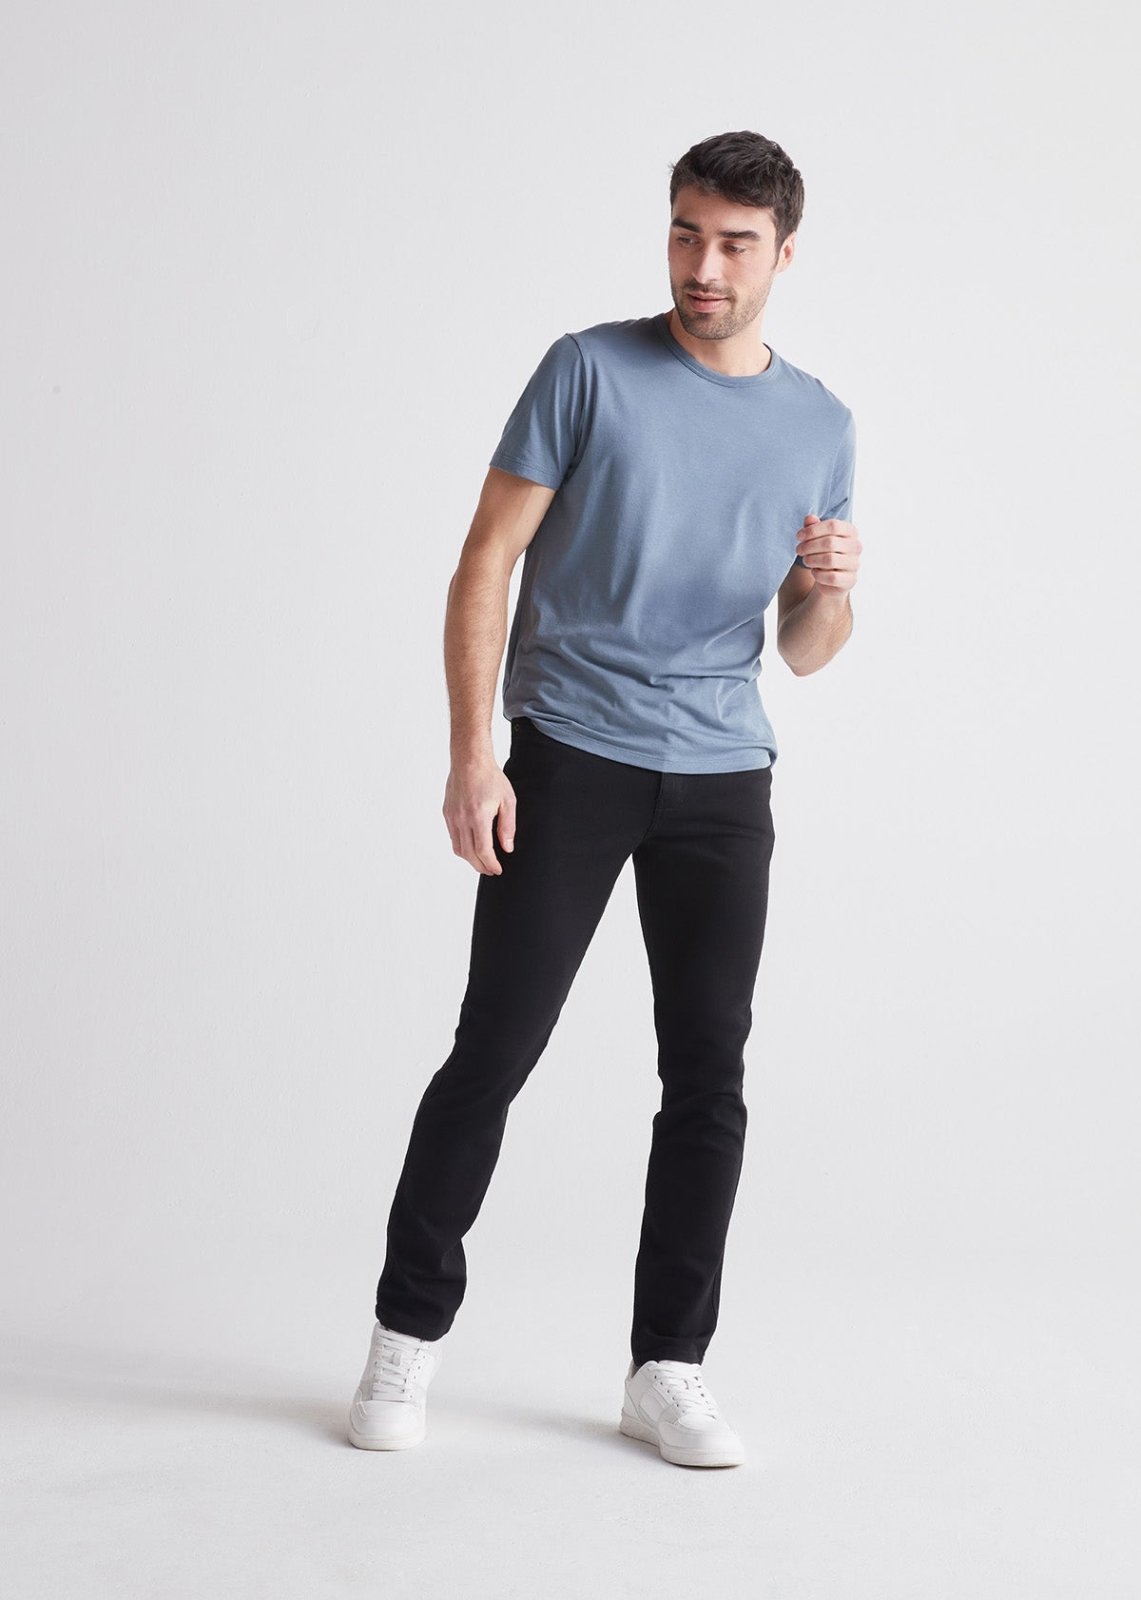 Men's Black Slim Fit Stretch Jeans